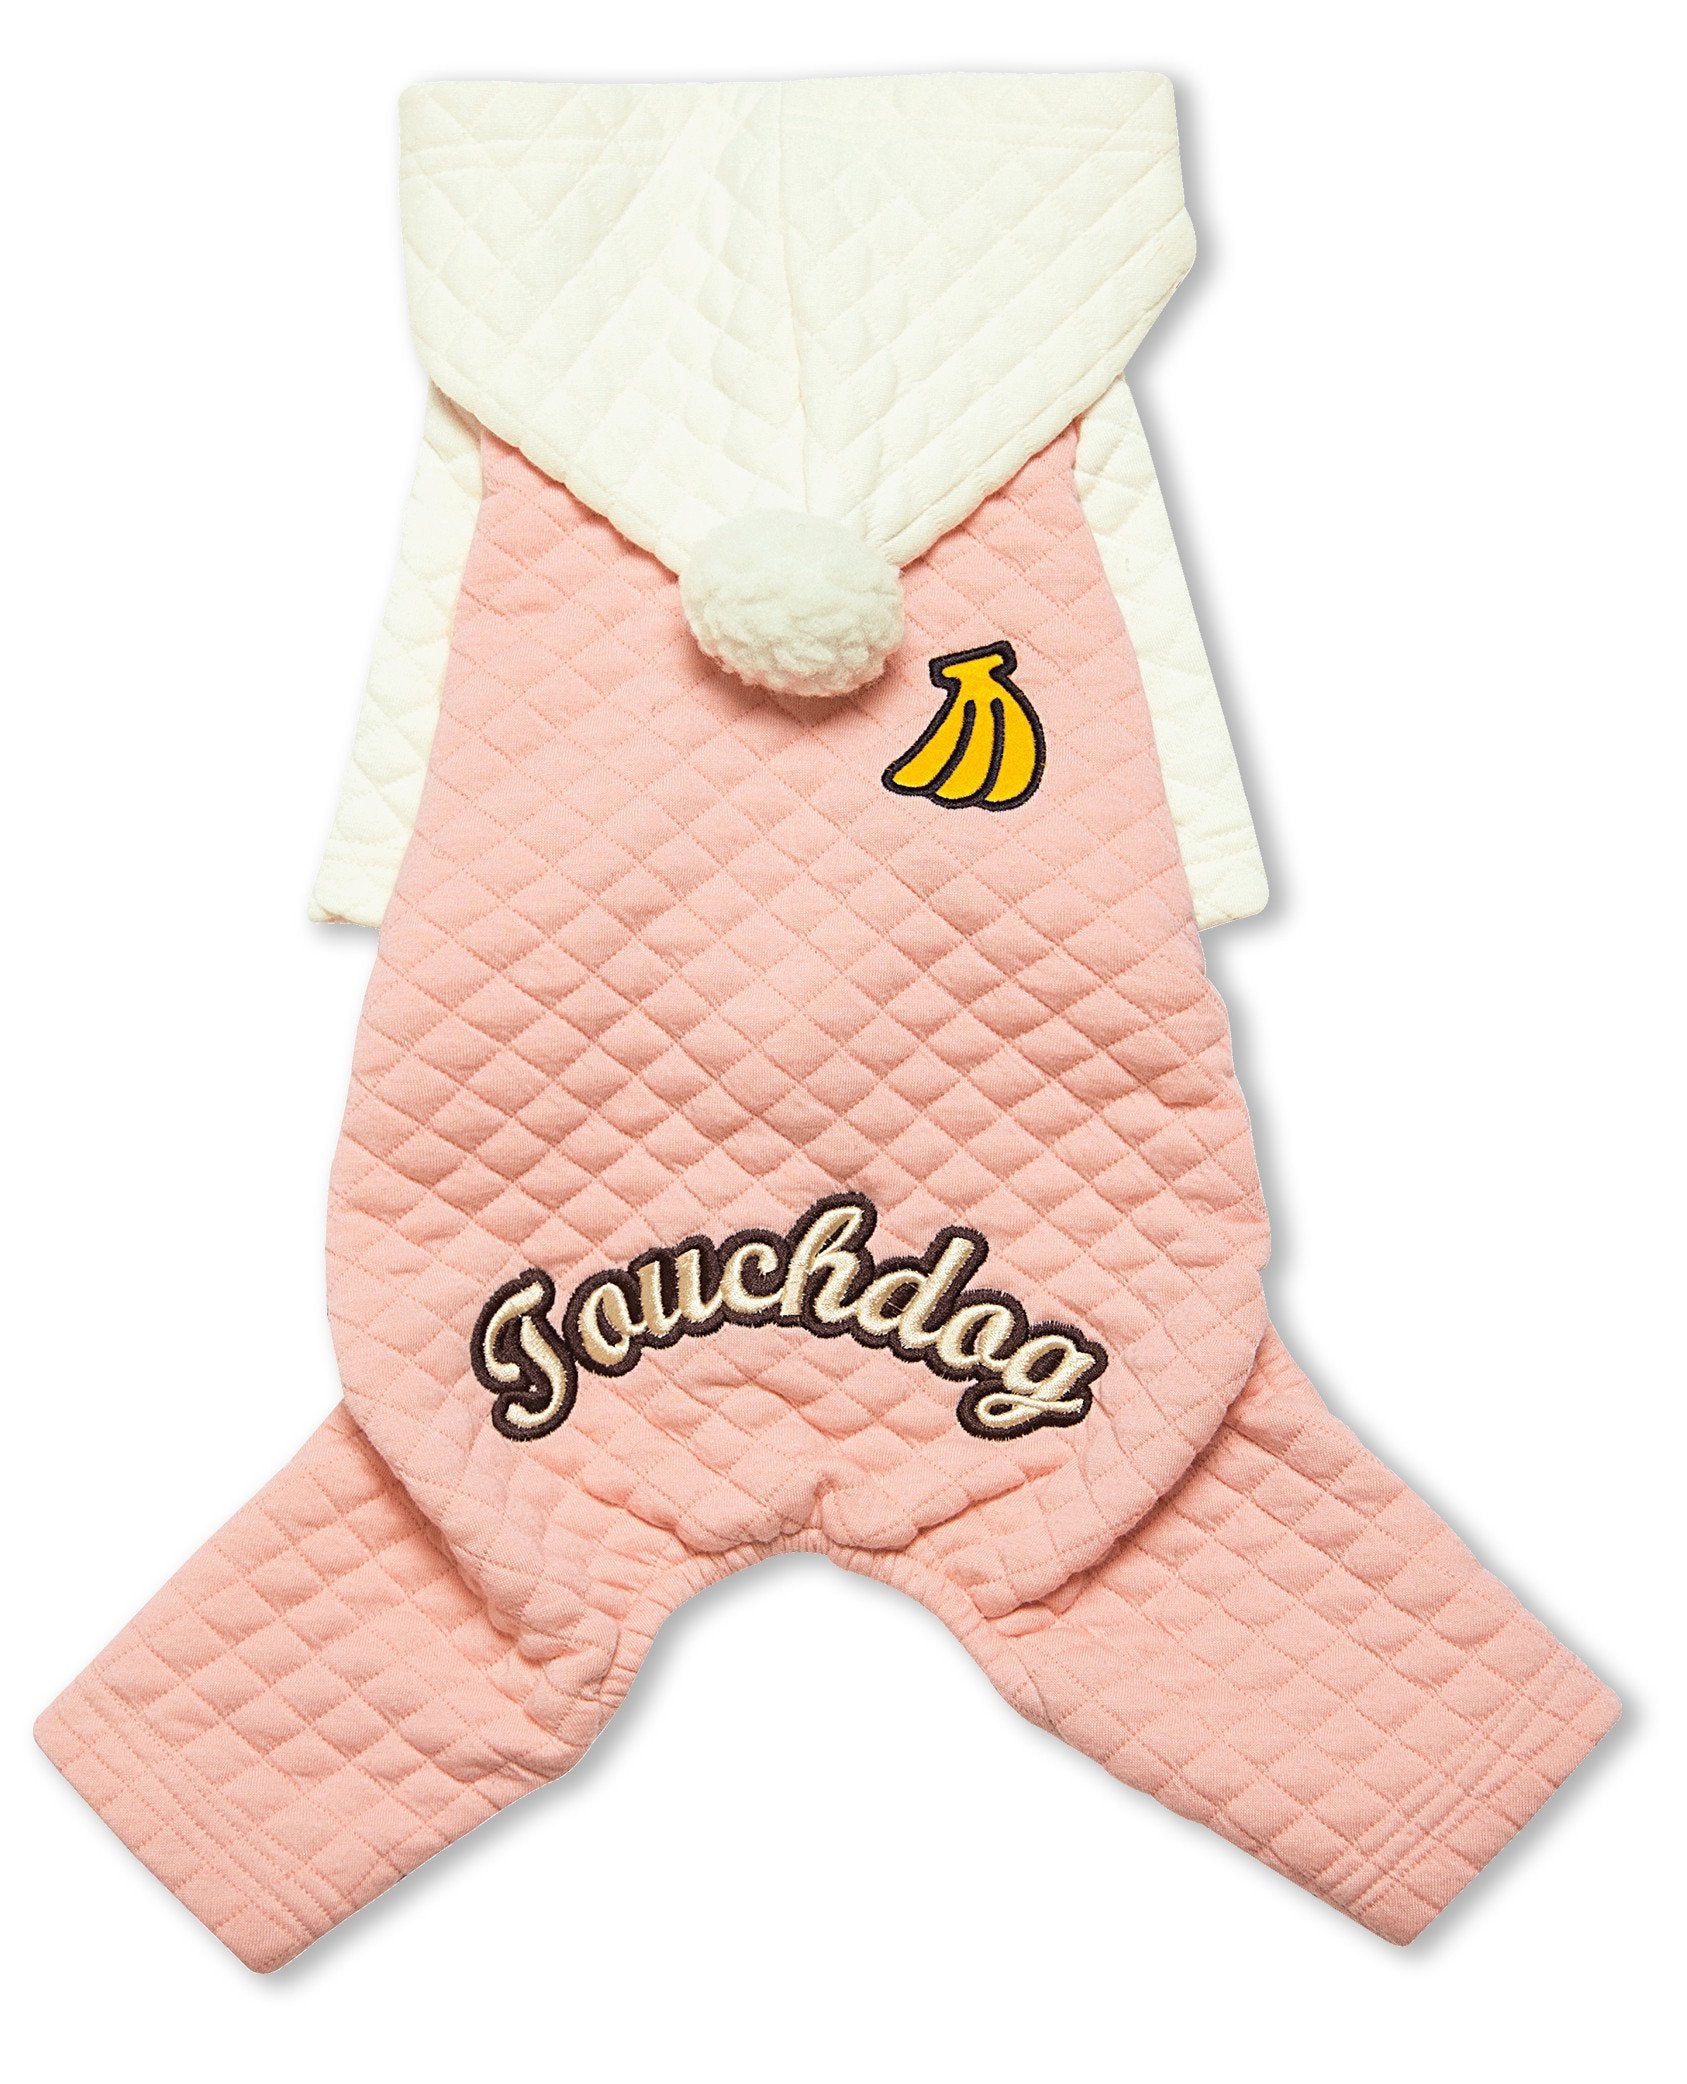 Touchdog Fashion Designer Dog Hooded Sweater - Pink/White - Large